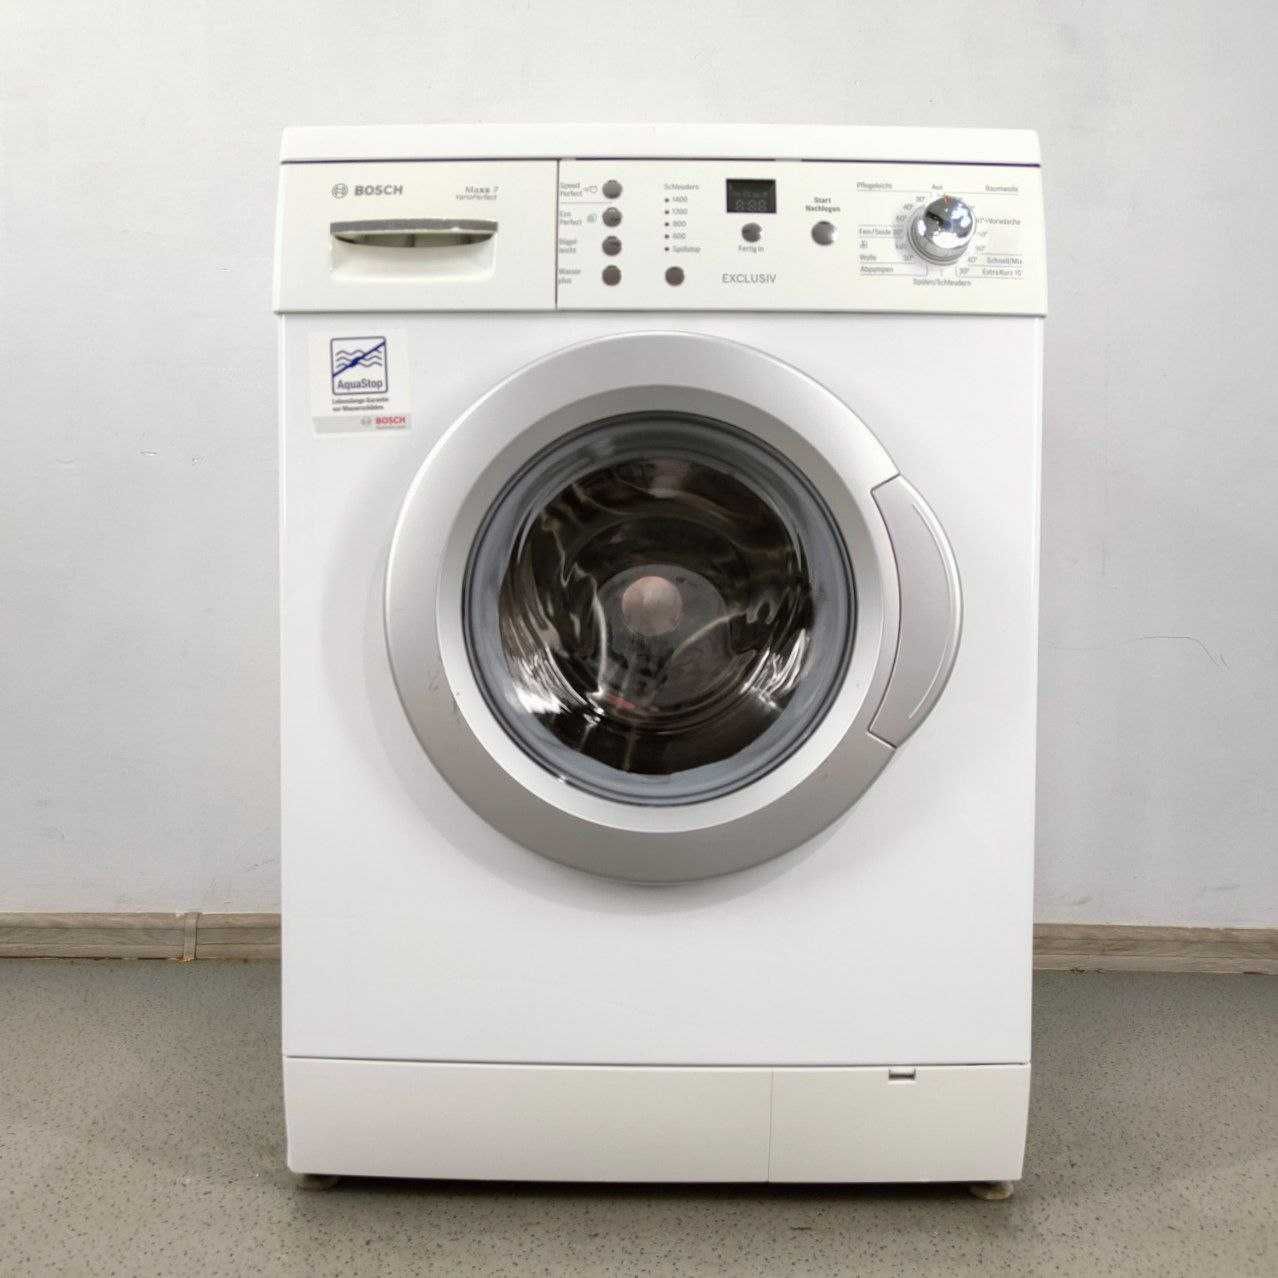 Стиральная машина Bosch стиральная машинка Бош